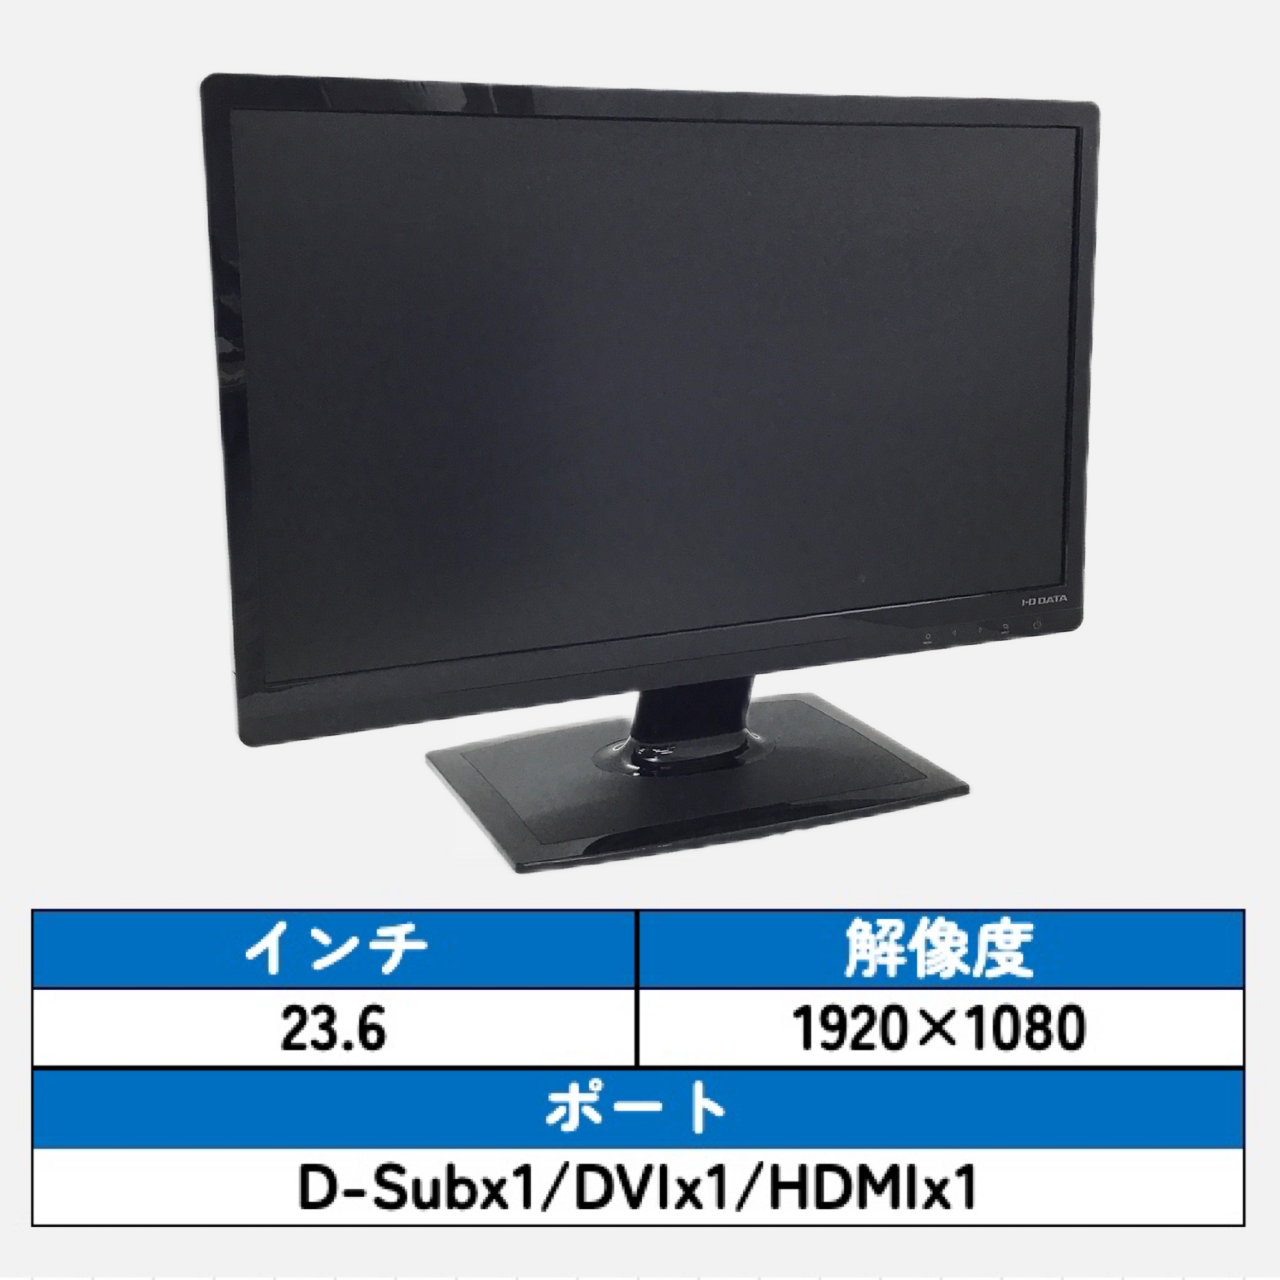 IODATA LCD-MF243EBR 23.6インチ